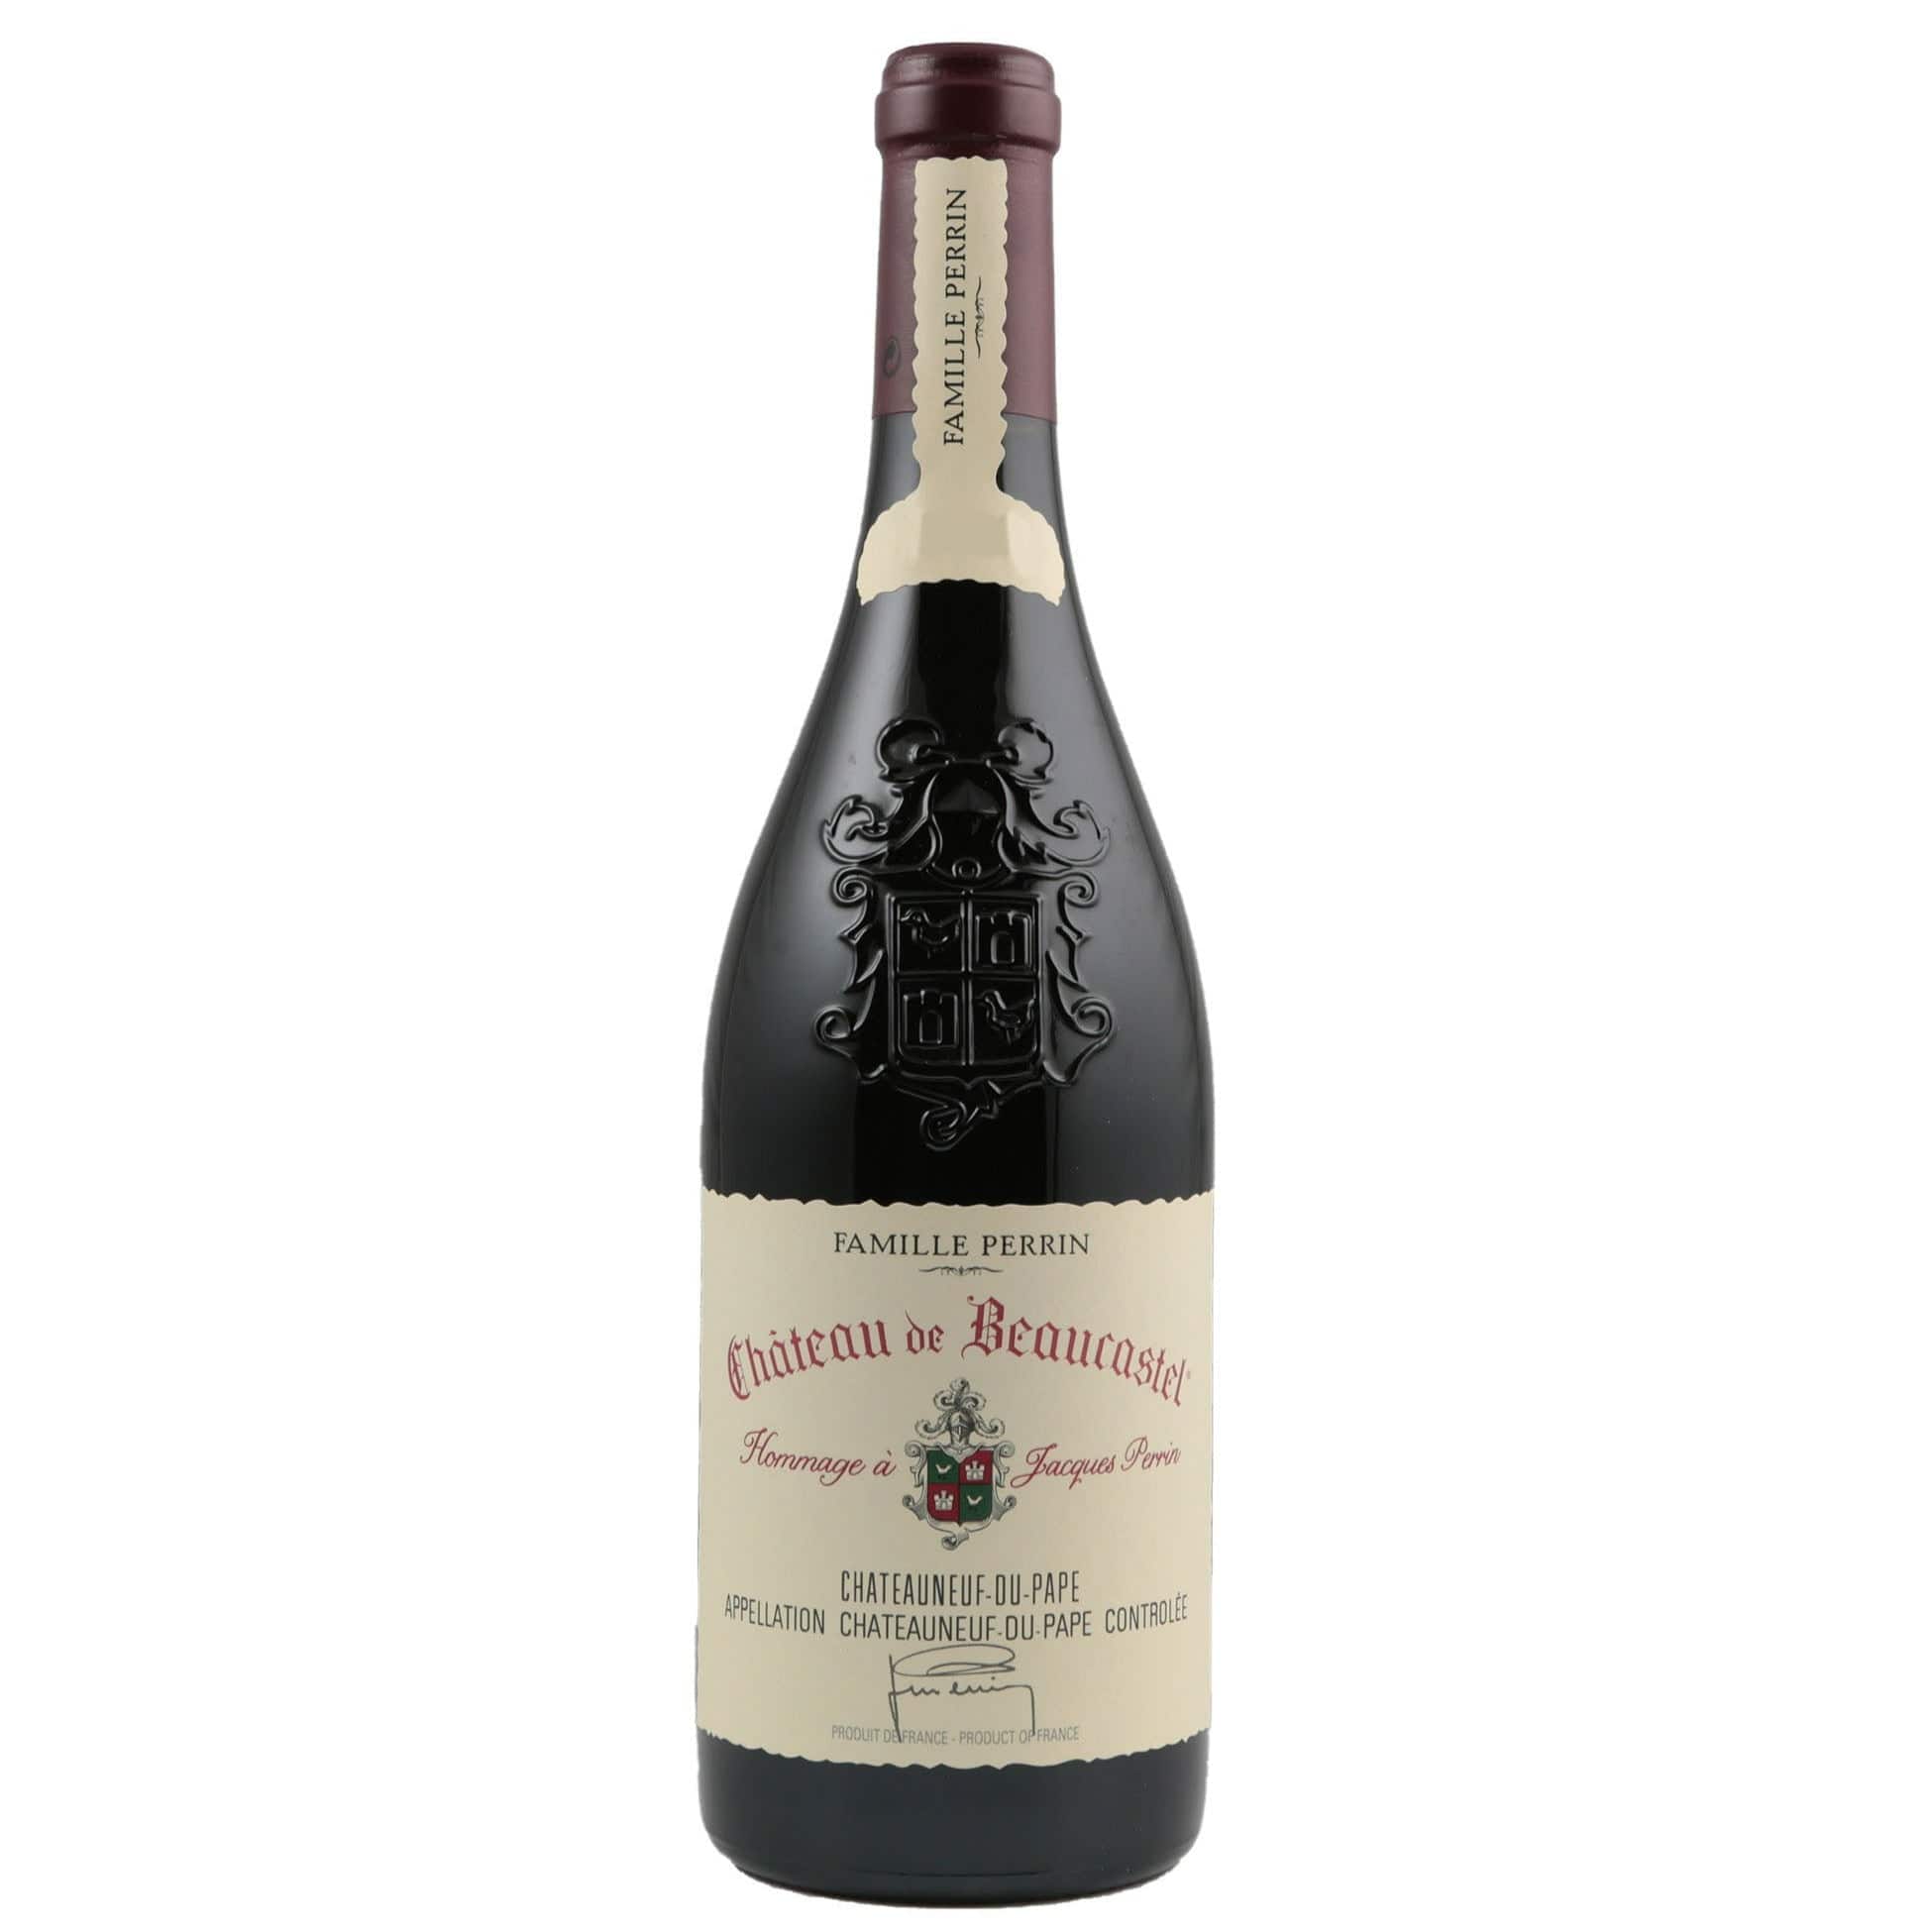 Single bottle of Red wine Chateau de Beaucastel, Chateauneuf du Pape, 2005 30% Grenache, 30% Mourvedre, 10% Syrah, 10% Counoise, 5% Cinsault & 15% Other